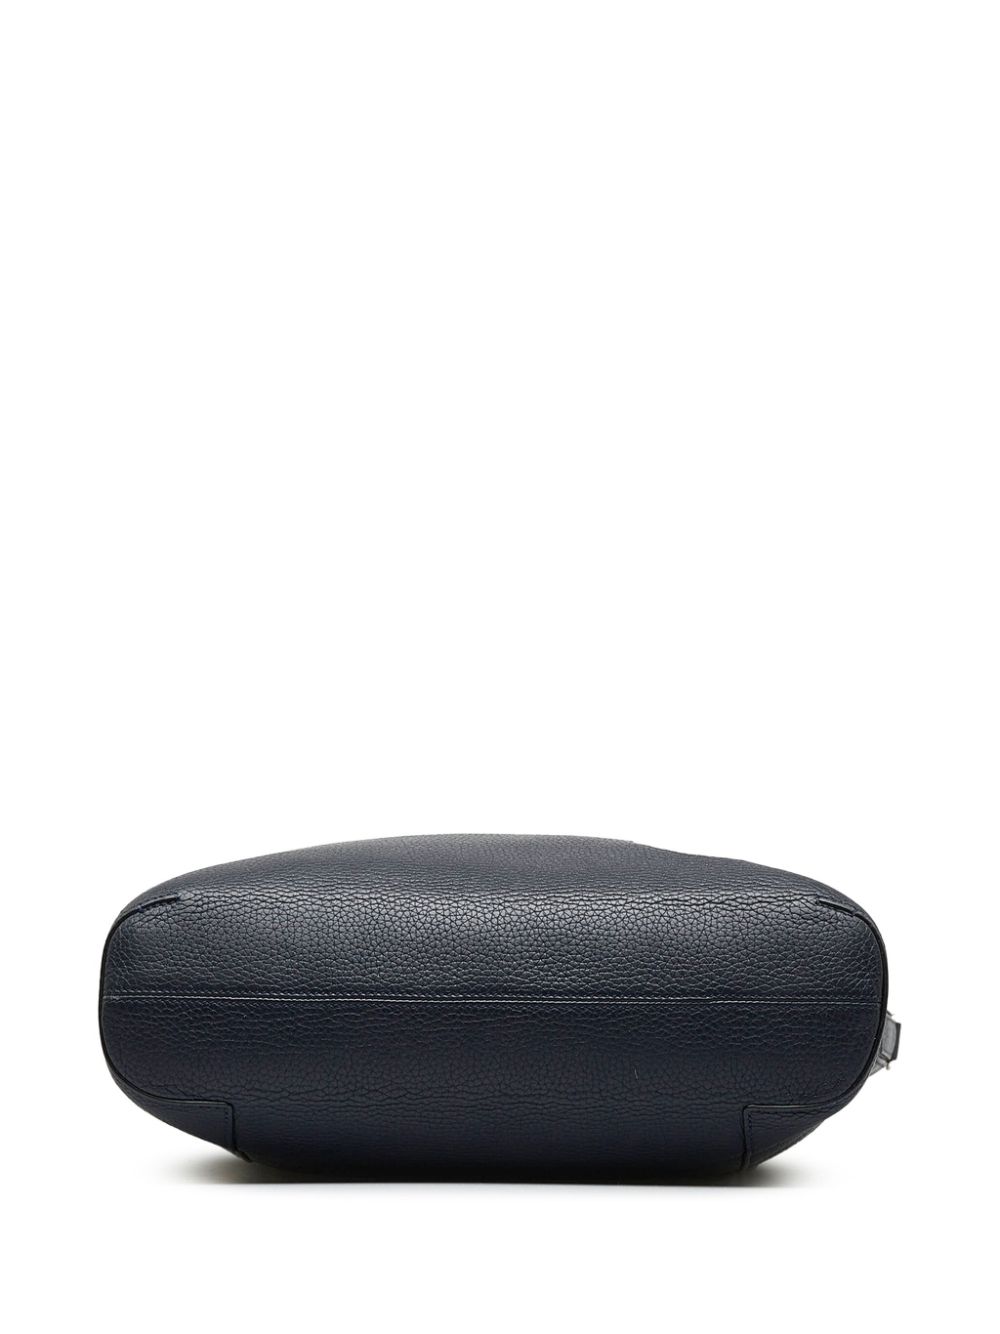 Louis Vuitton Eastside Navy Leather Shoulder Bag (Pre-Owned)